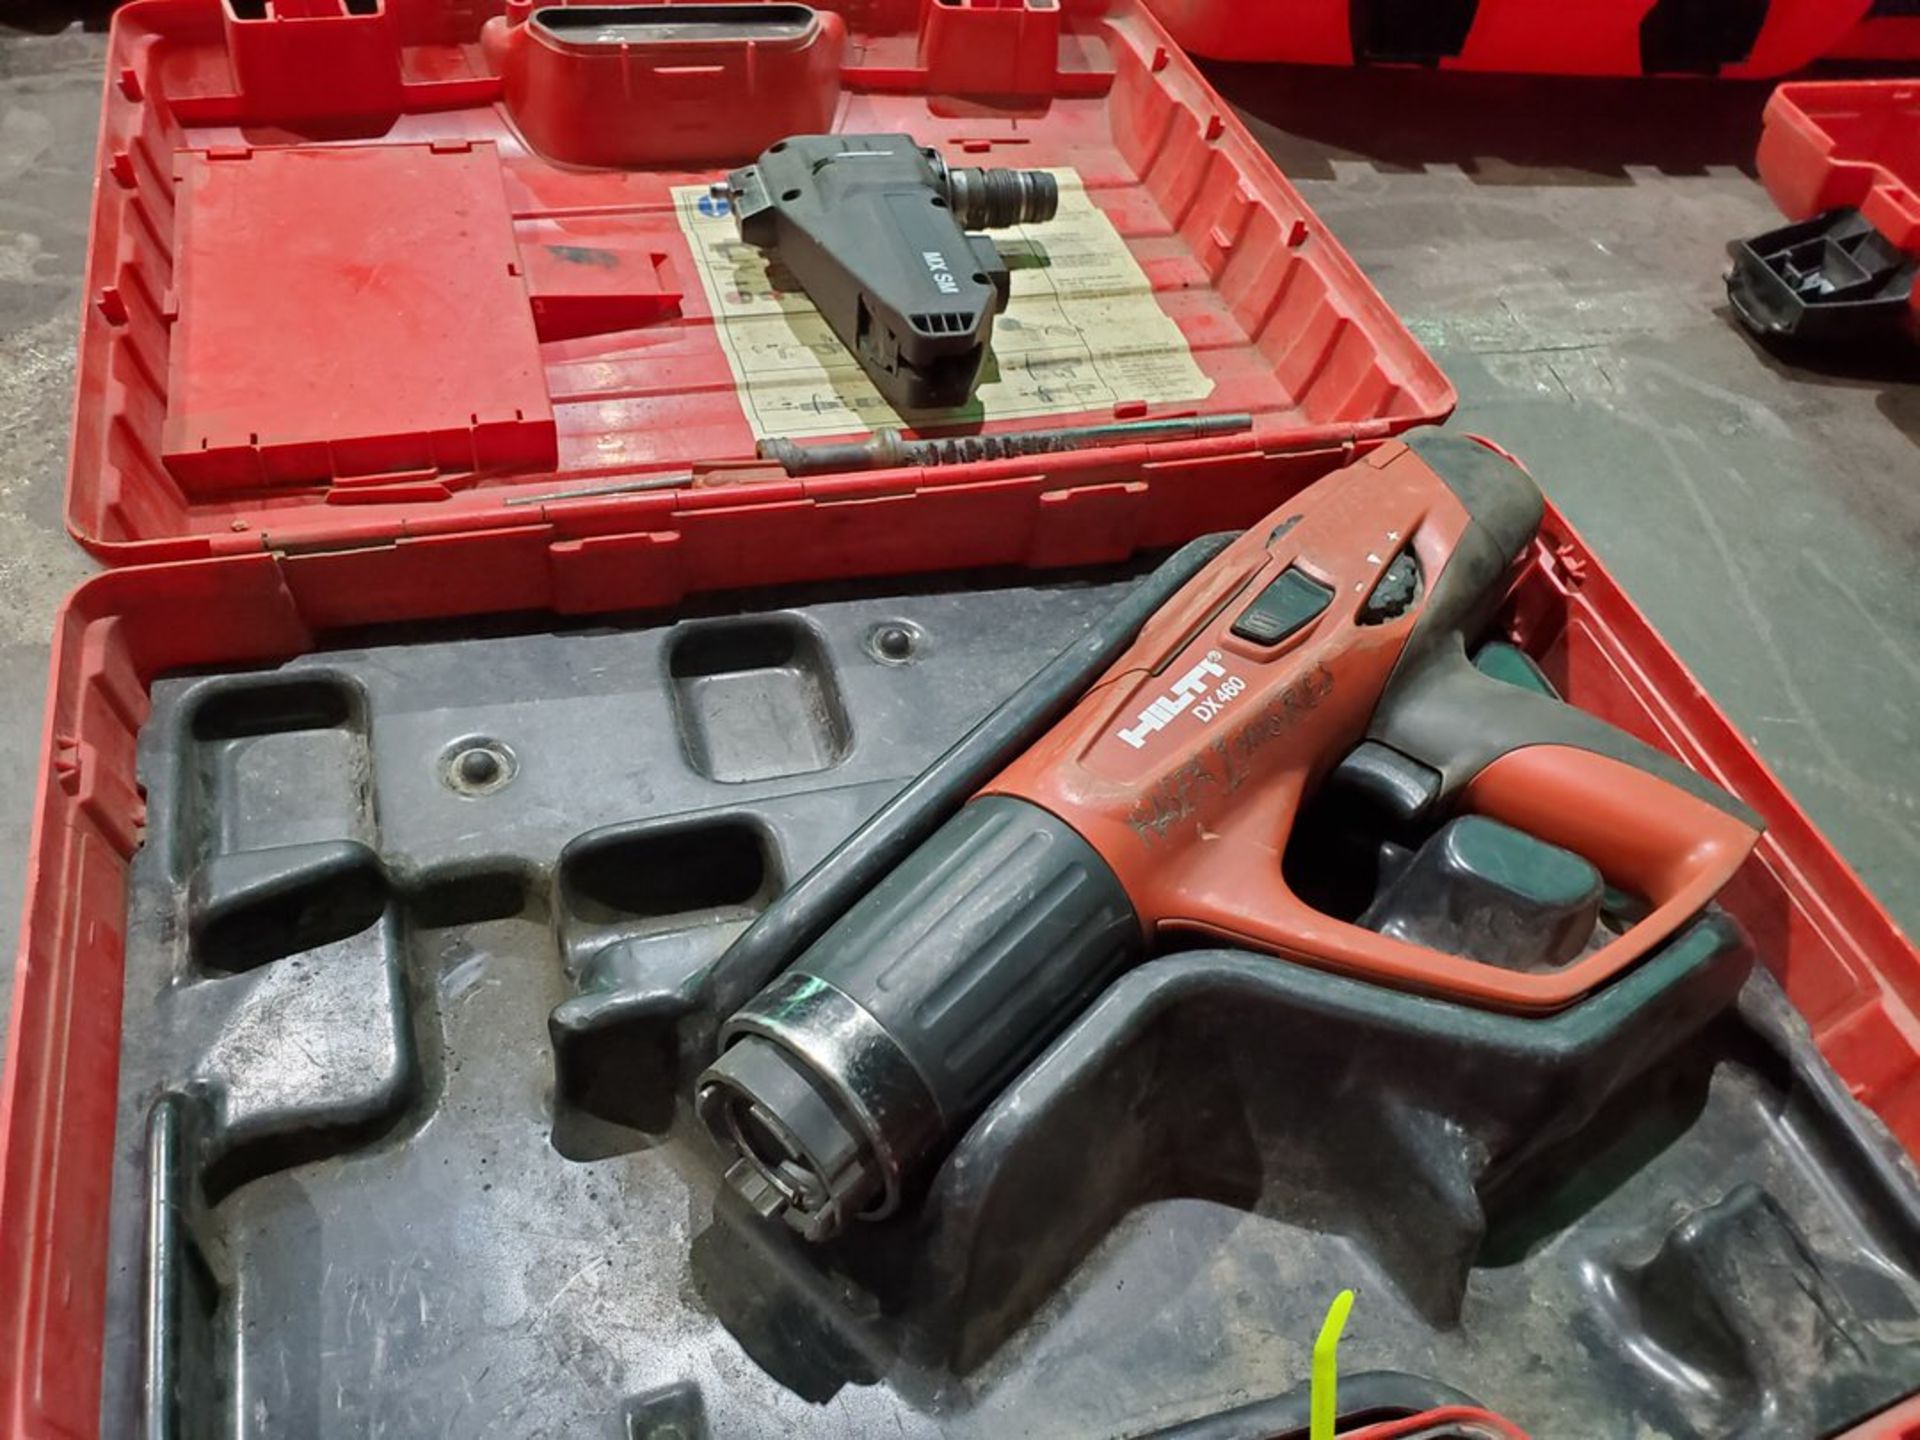 Hilti DX 460 Powder Actuated Nail Gun - Image 2 of 7